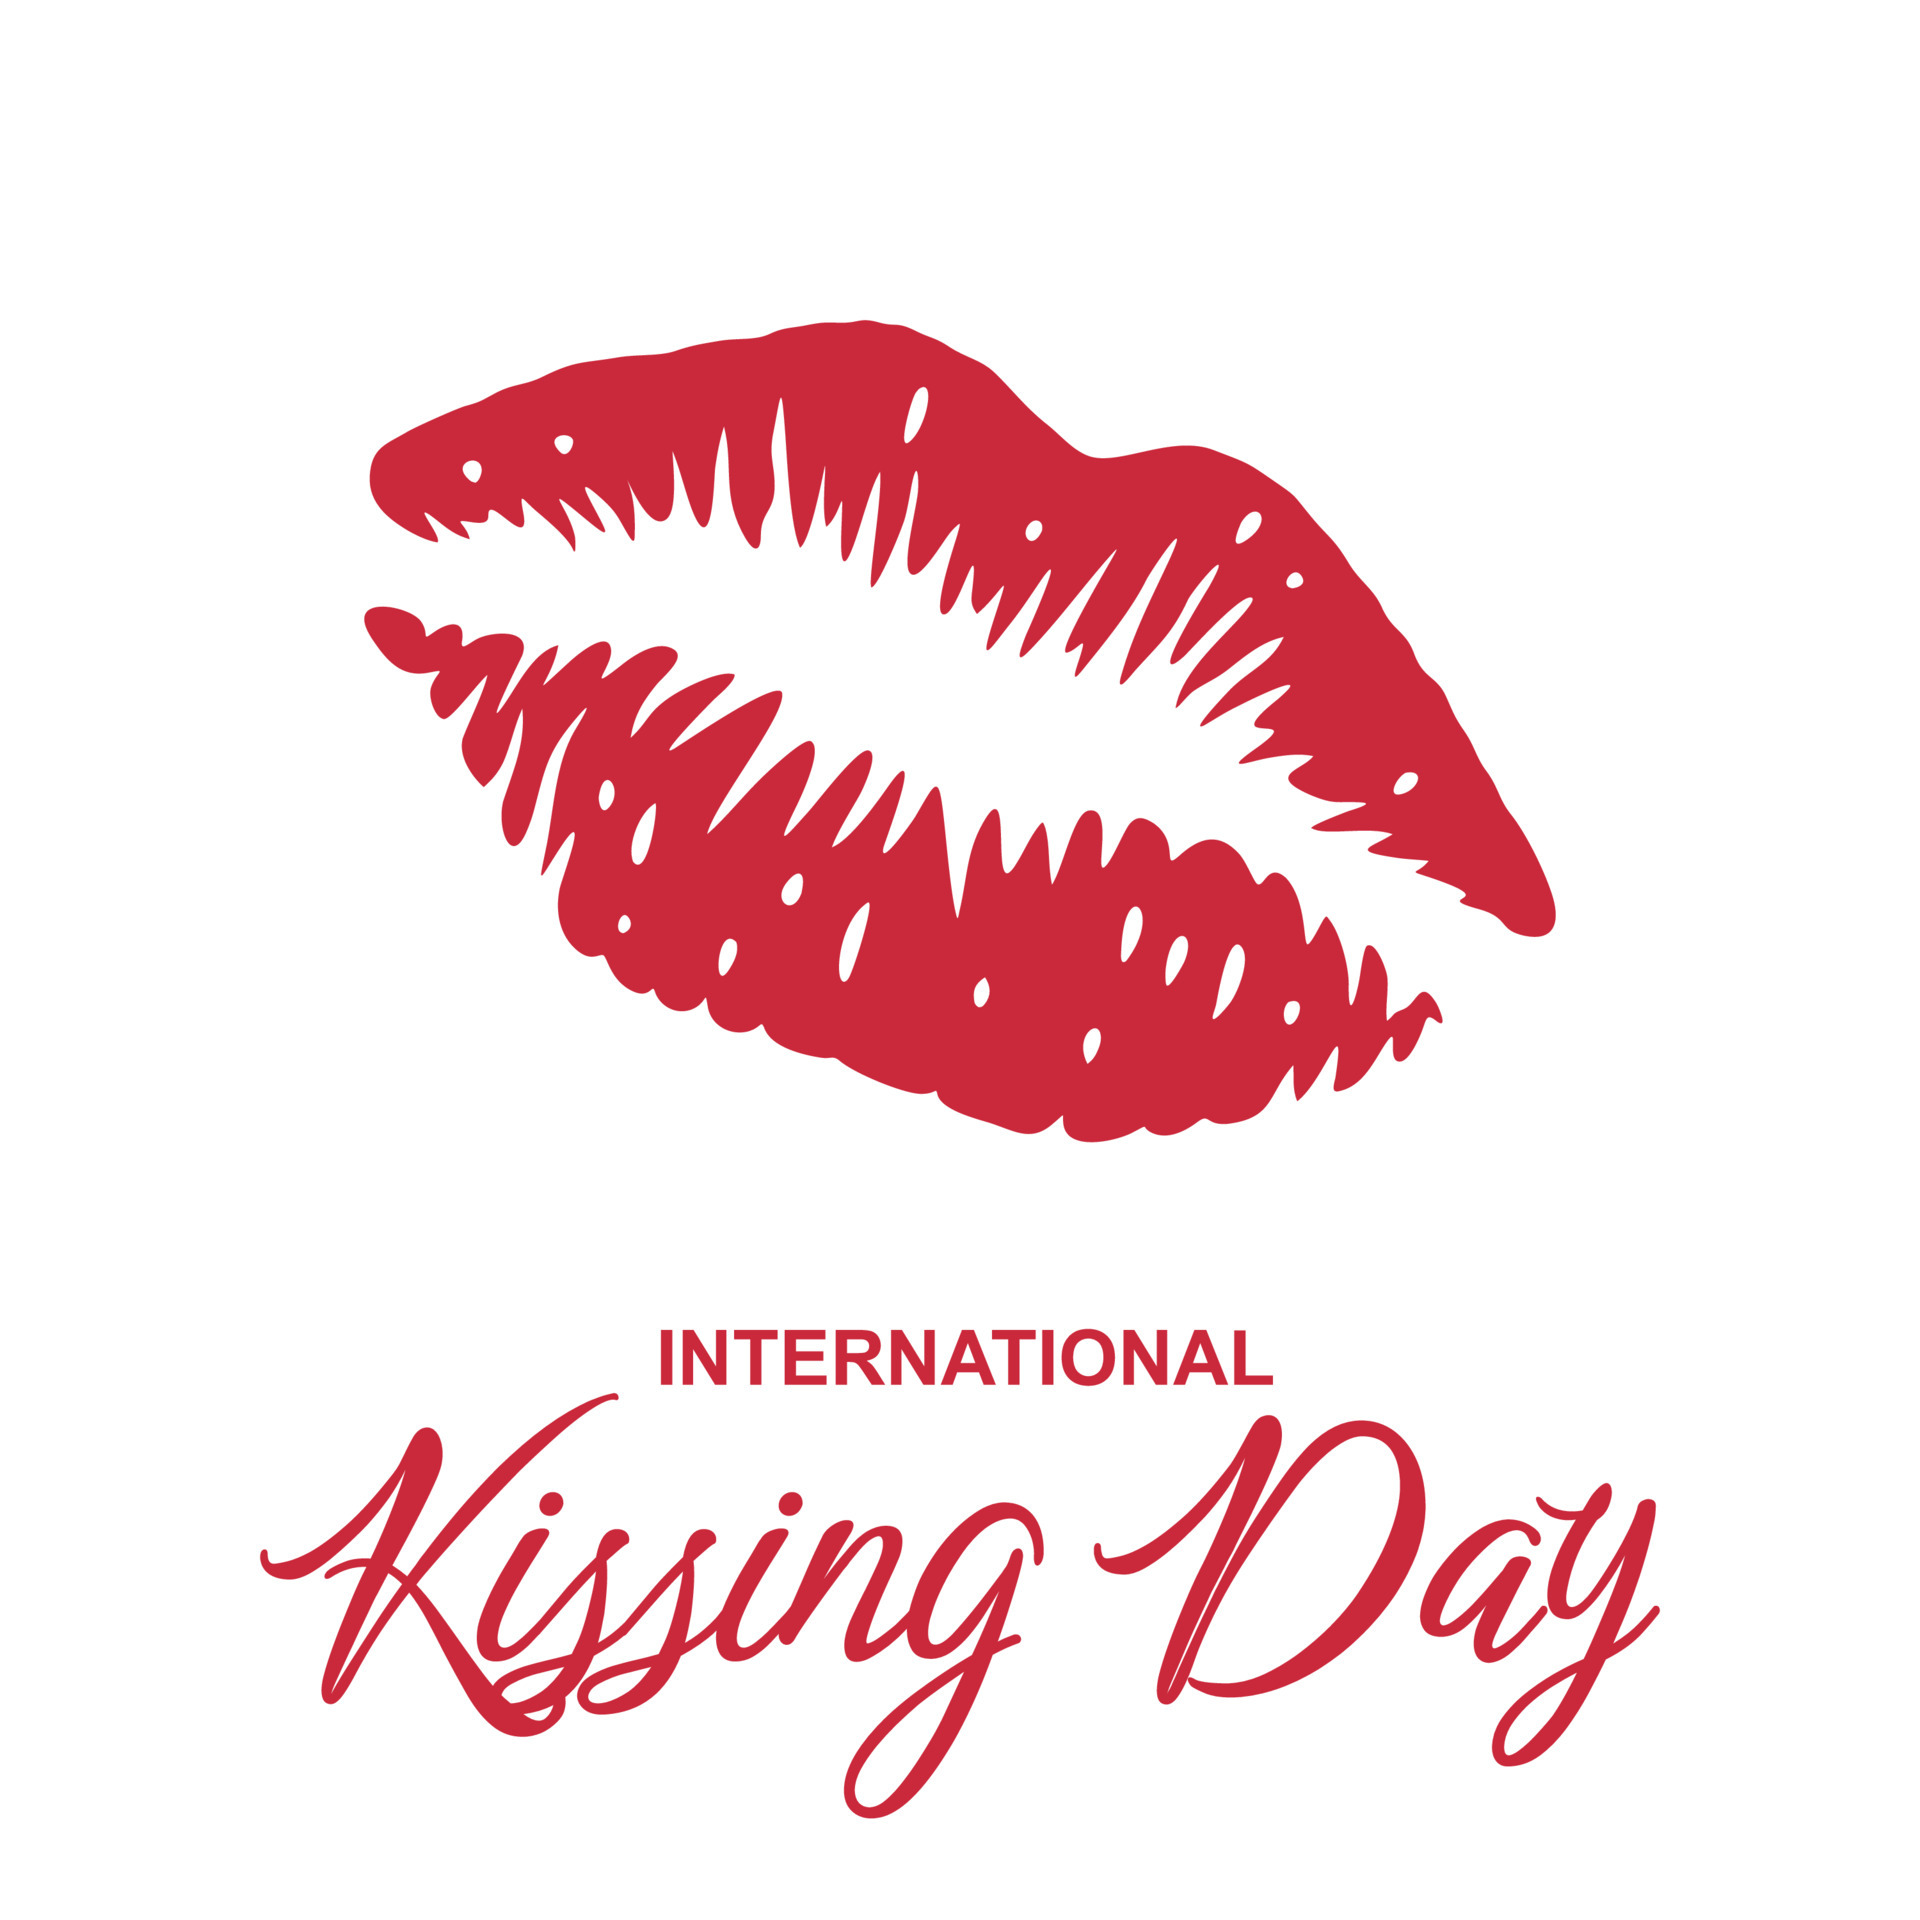 International kissing day vector background 6054168 Vector Art at Vecteezy